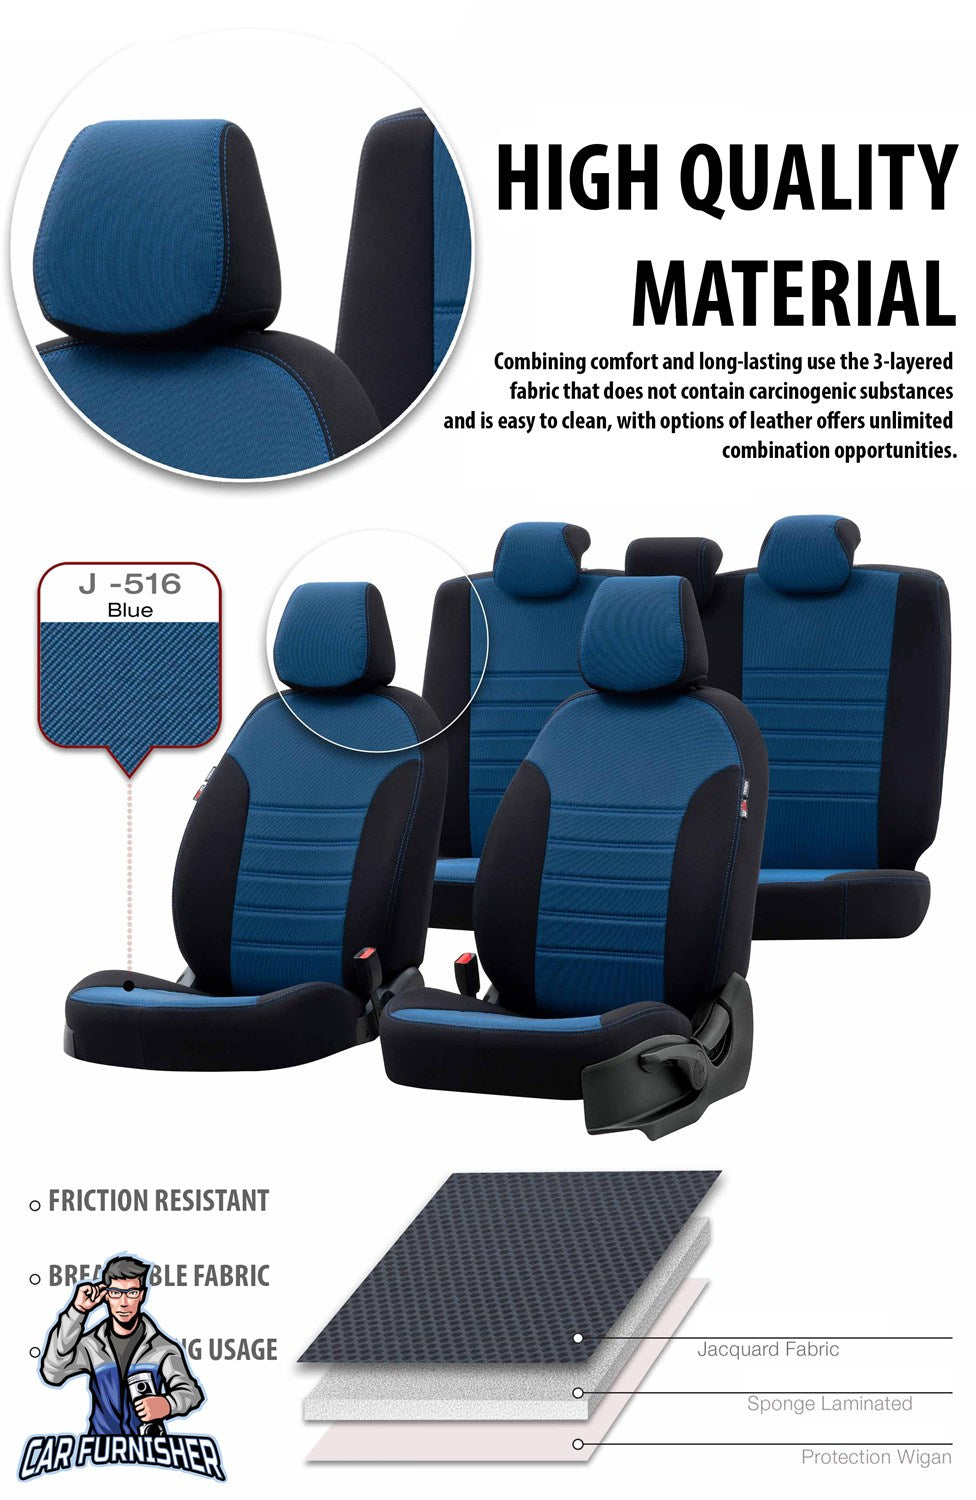 Fiat Freemont Seat Covers Original Jacquard Design Light Gray Jacquard Fabric